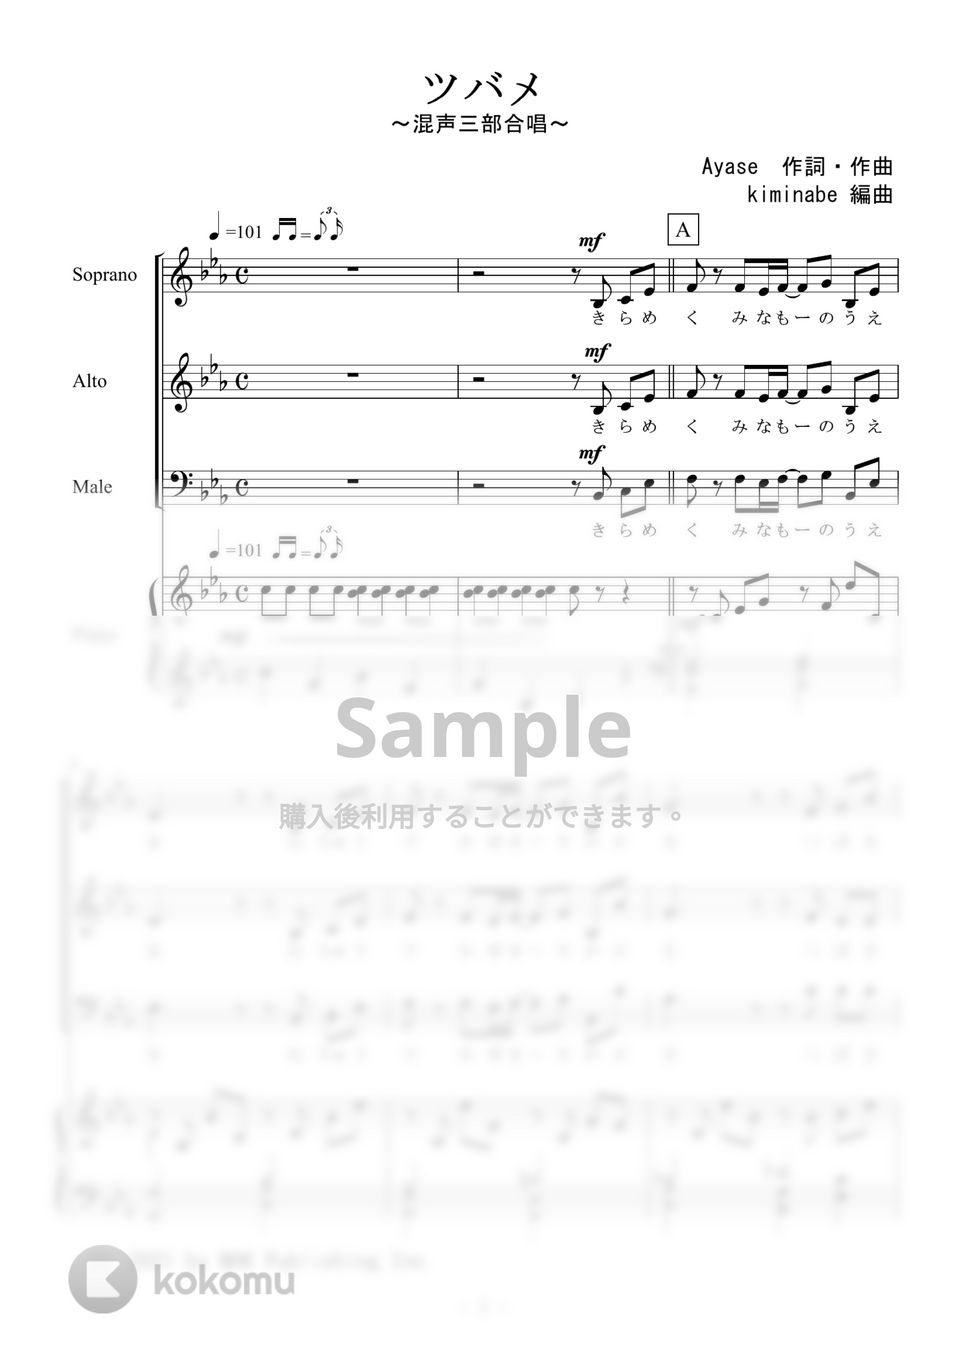 Ayase - ツバメ (混声三部合唱) by kiminabe